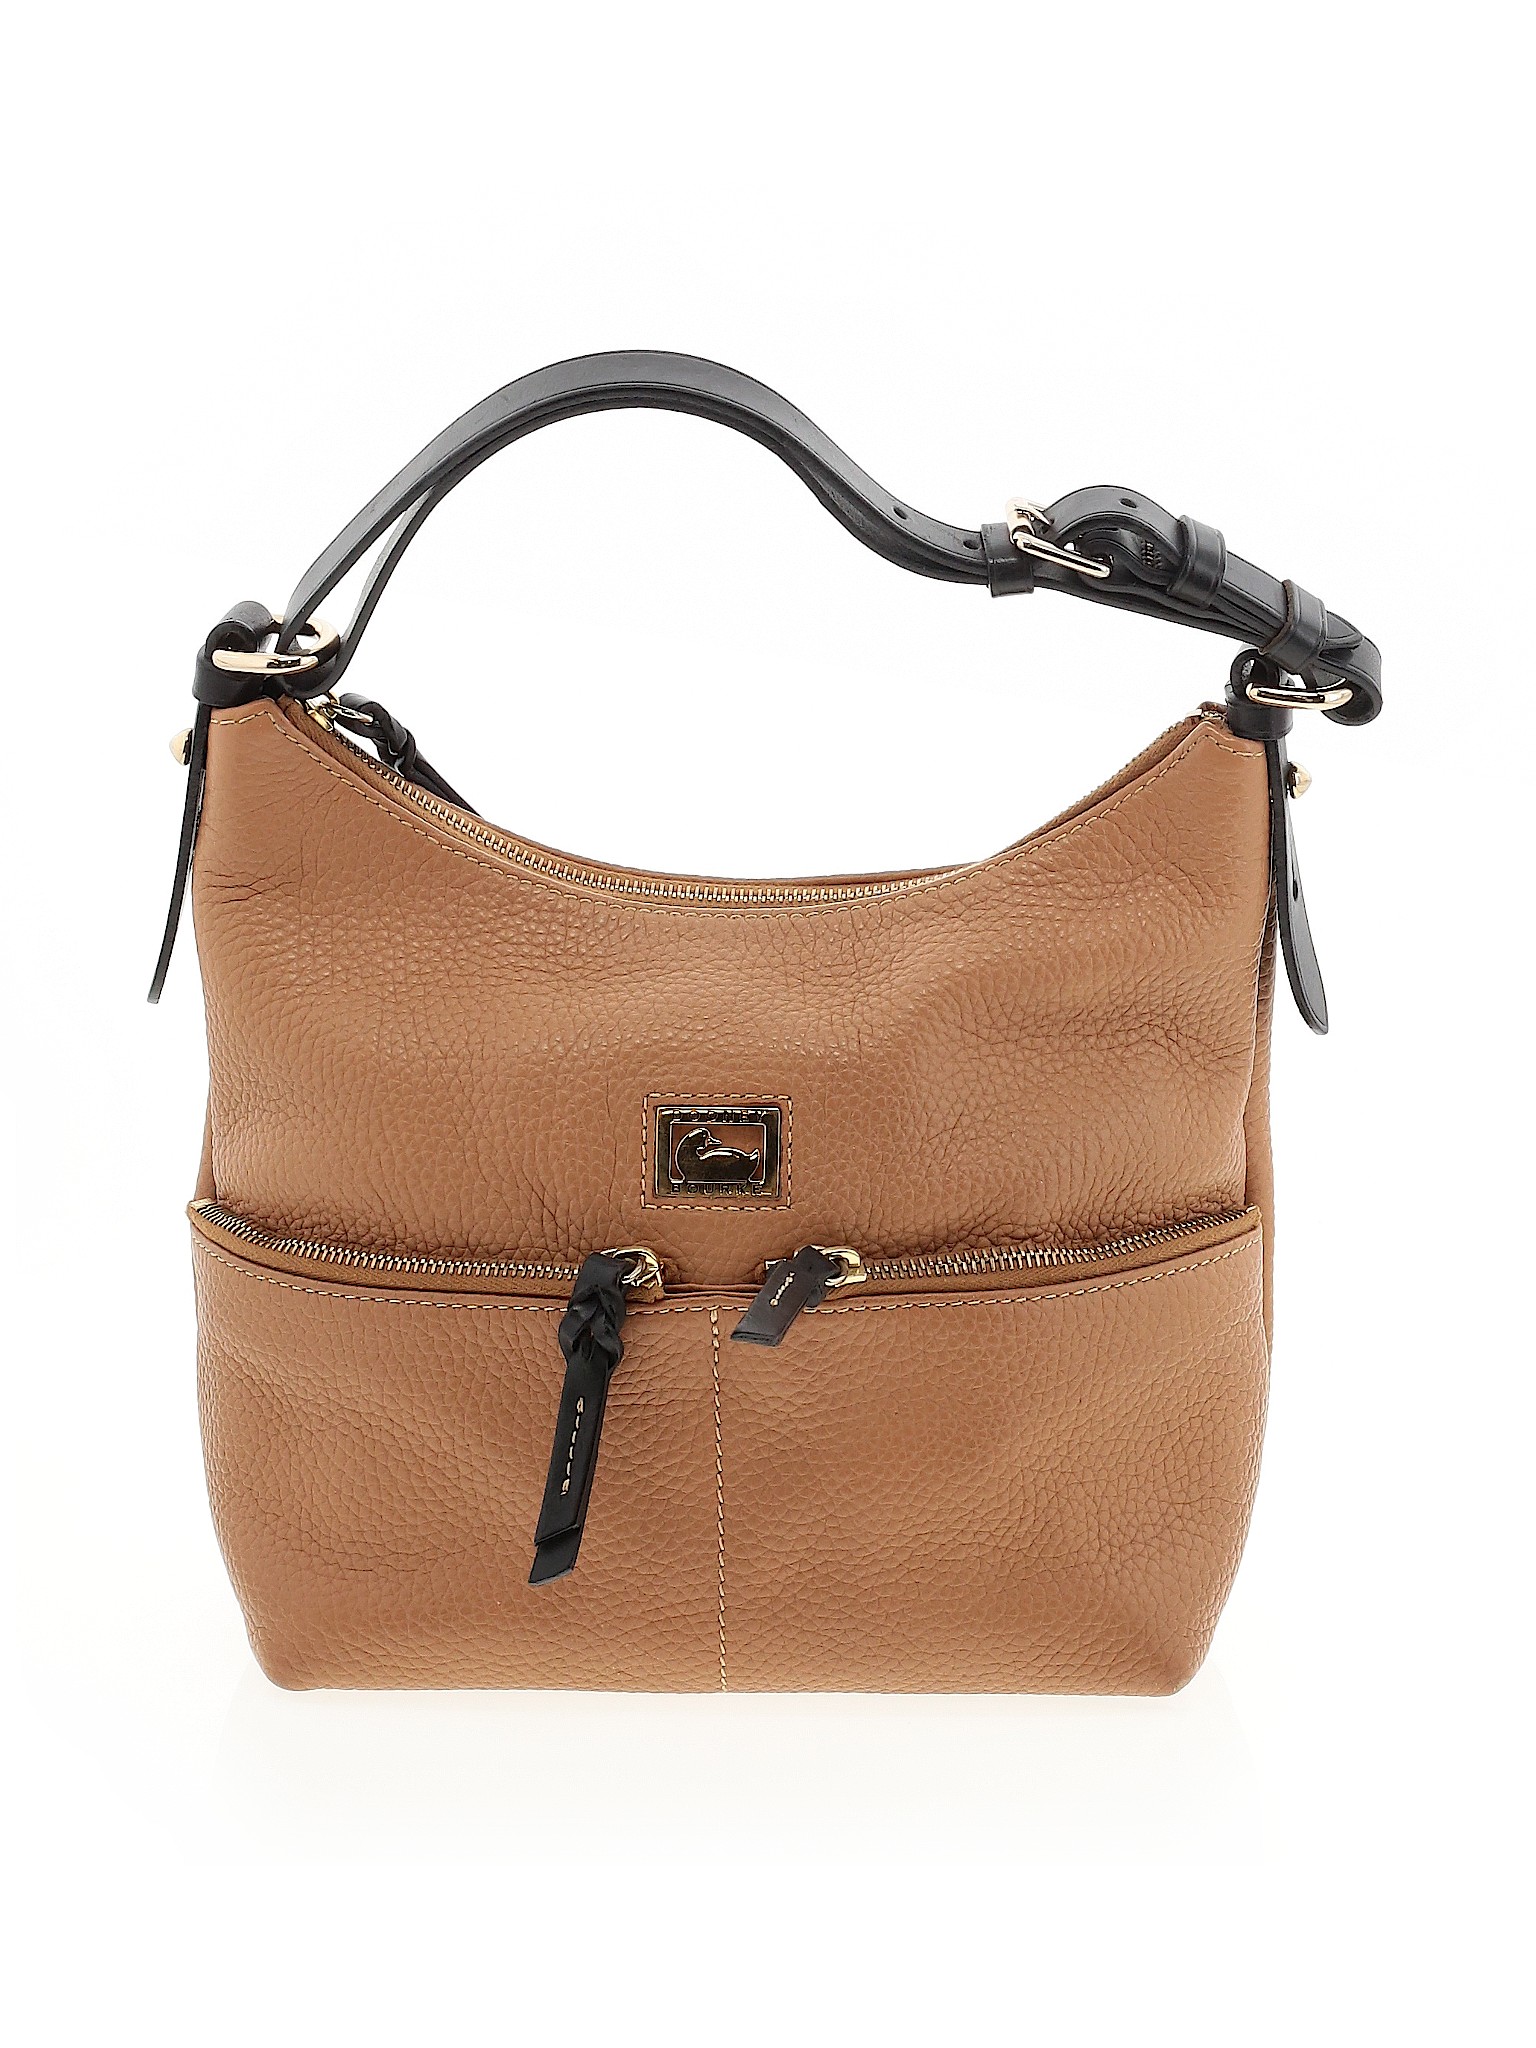 Dooney & Bourke 100% Leather Solid Tan Brown Leather Shoulder Bag One